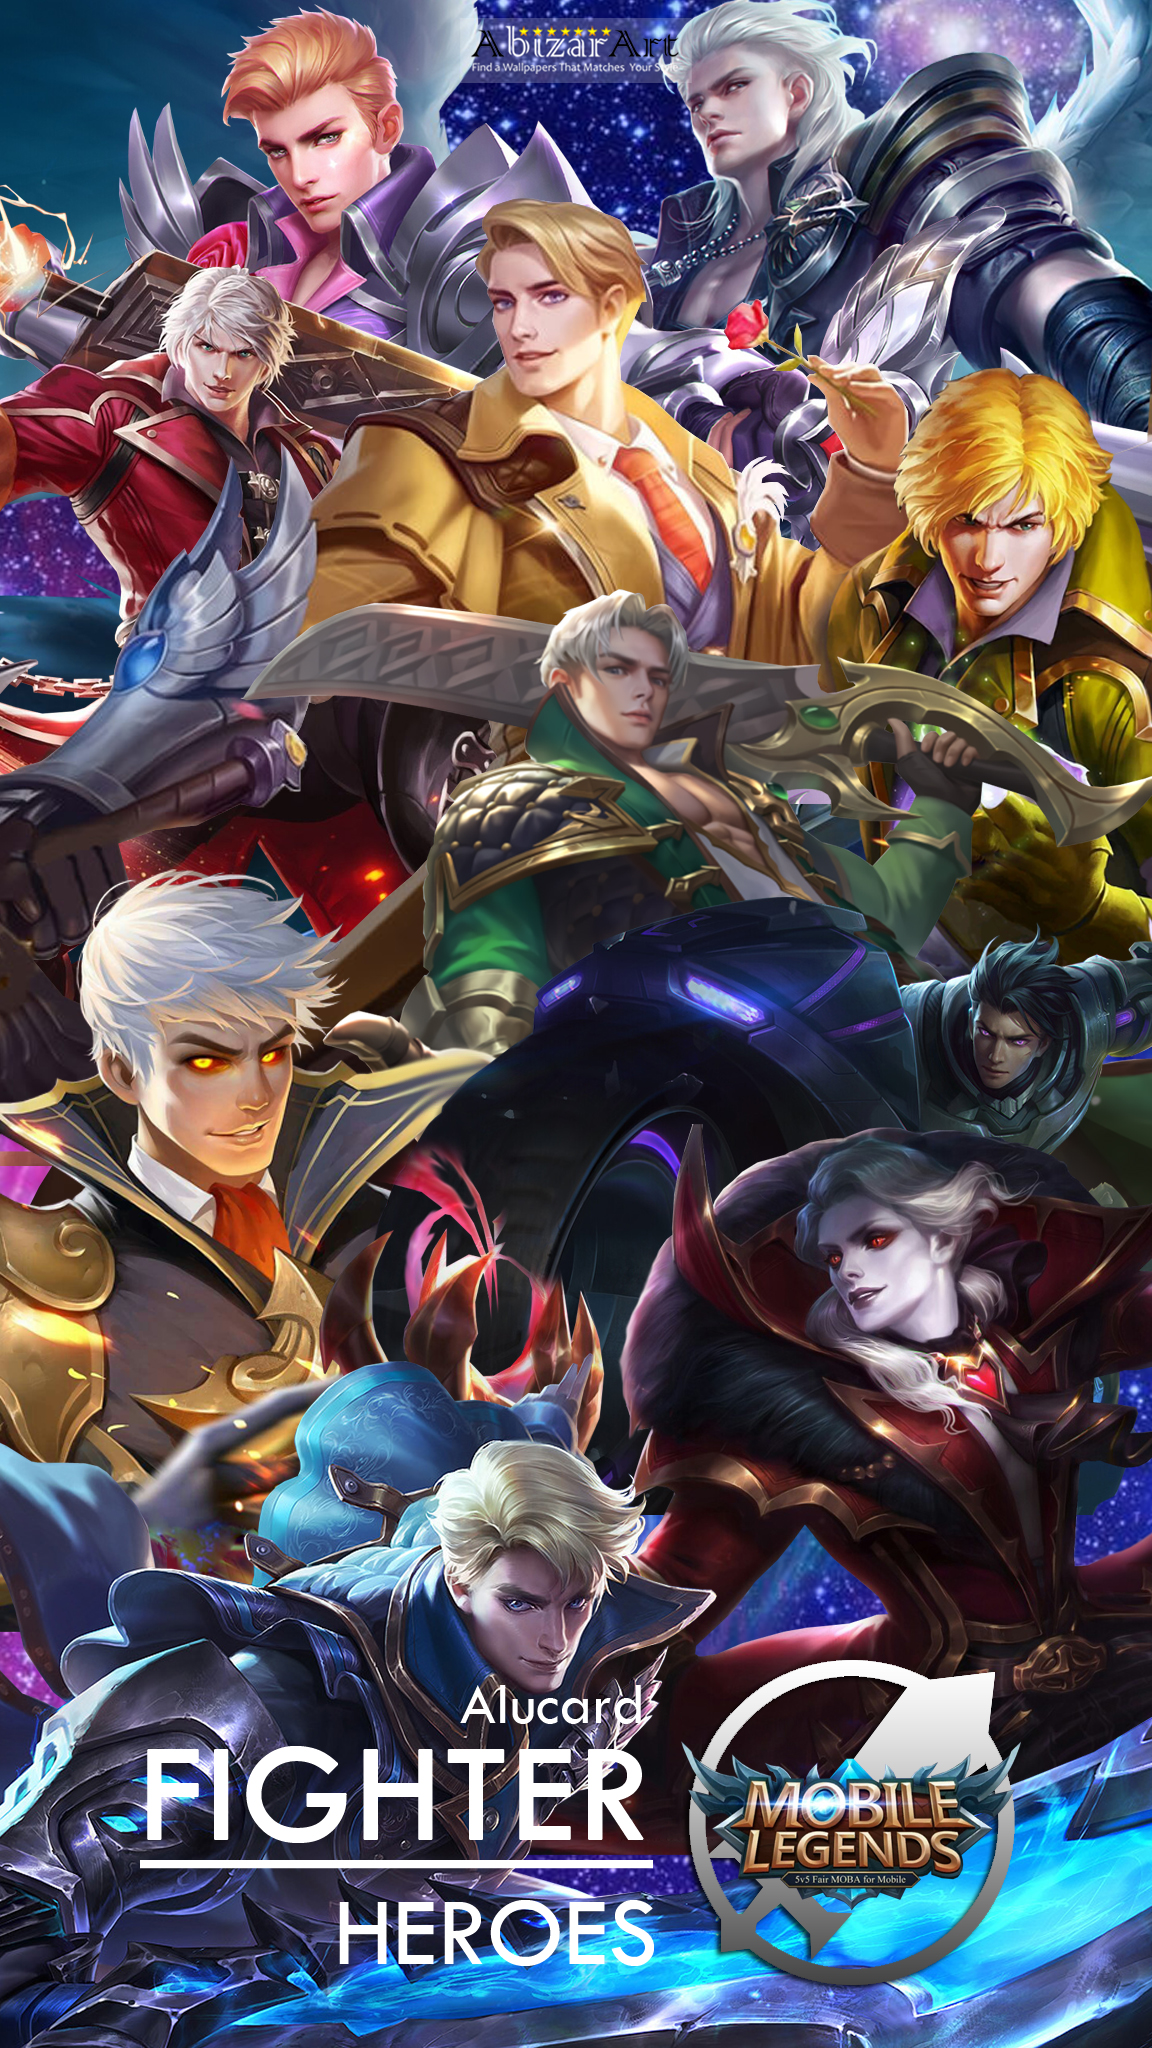 Alucard Fighter Heroes Mobile Legends By AbizarArtWallpapers On DeviantArt